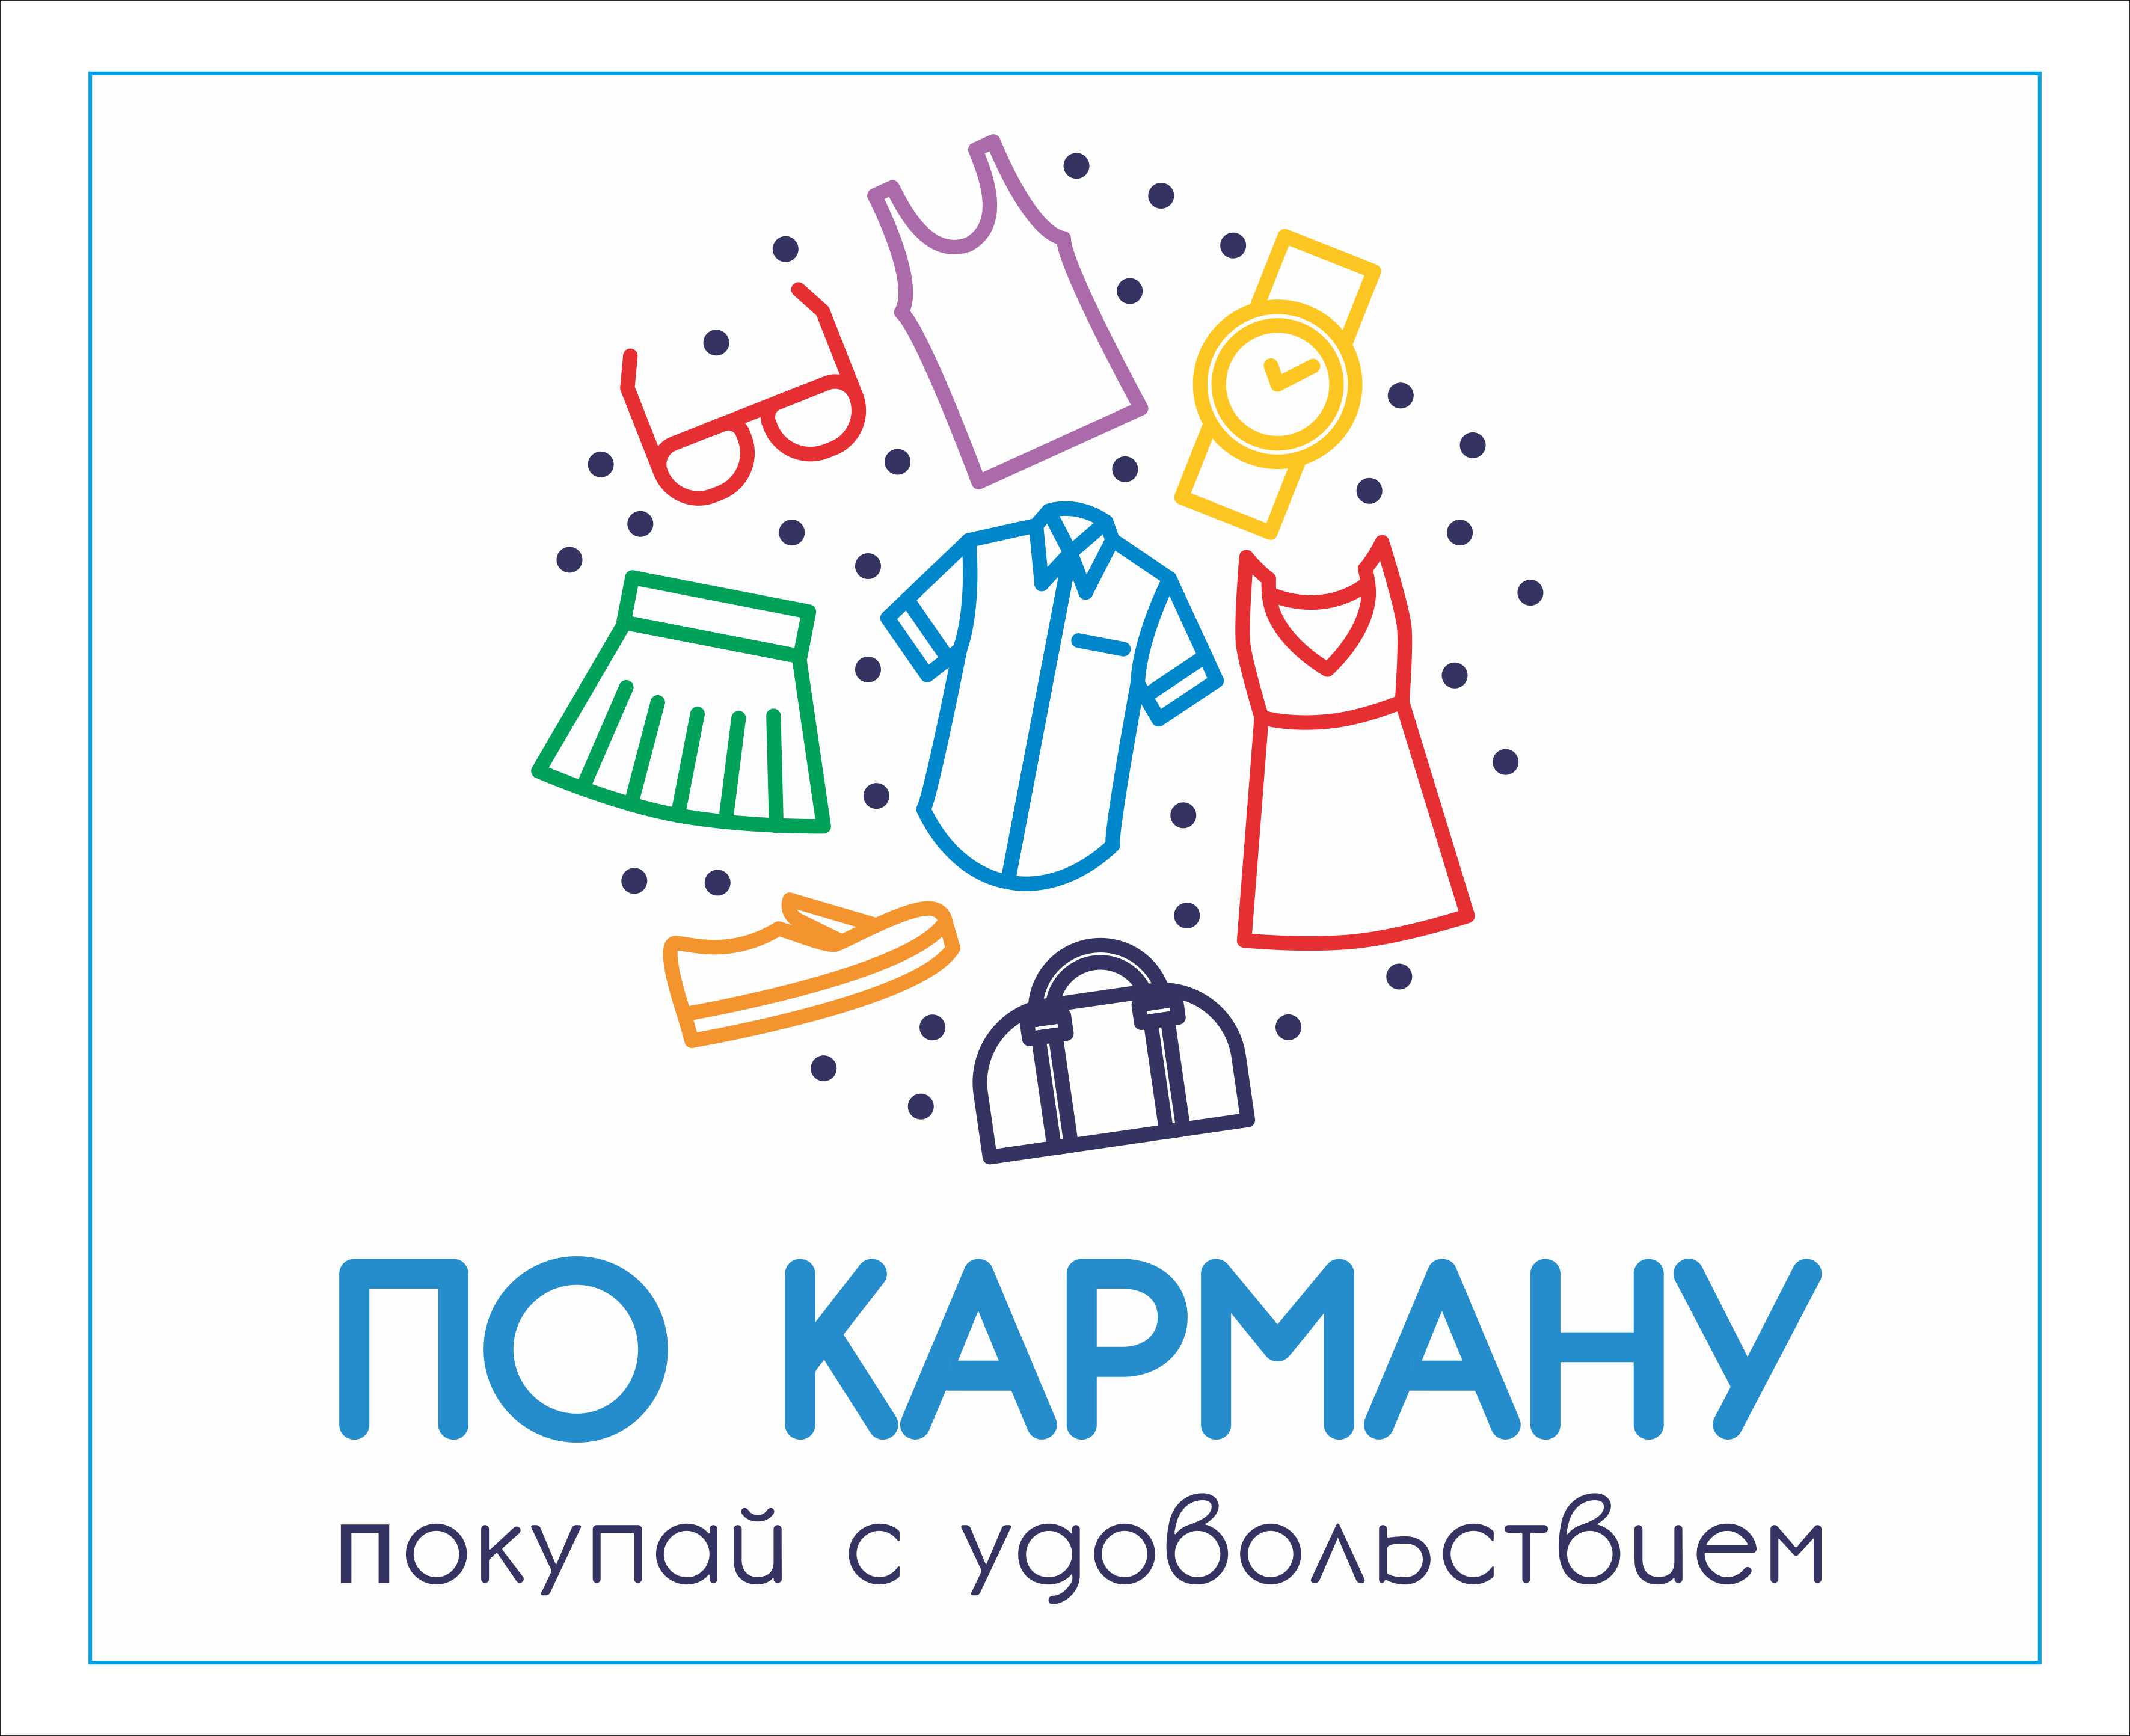 Логотип покупки